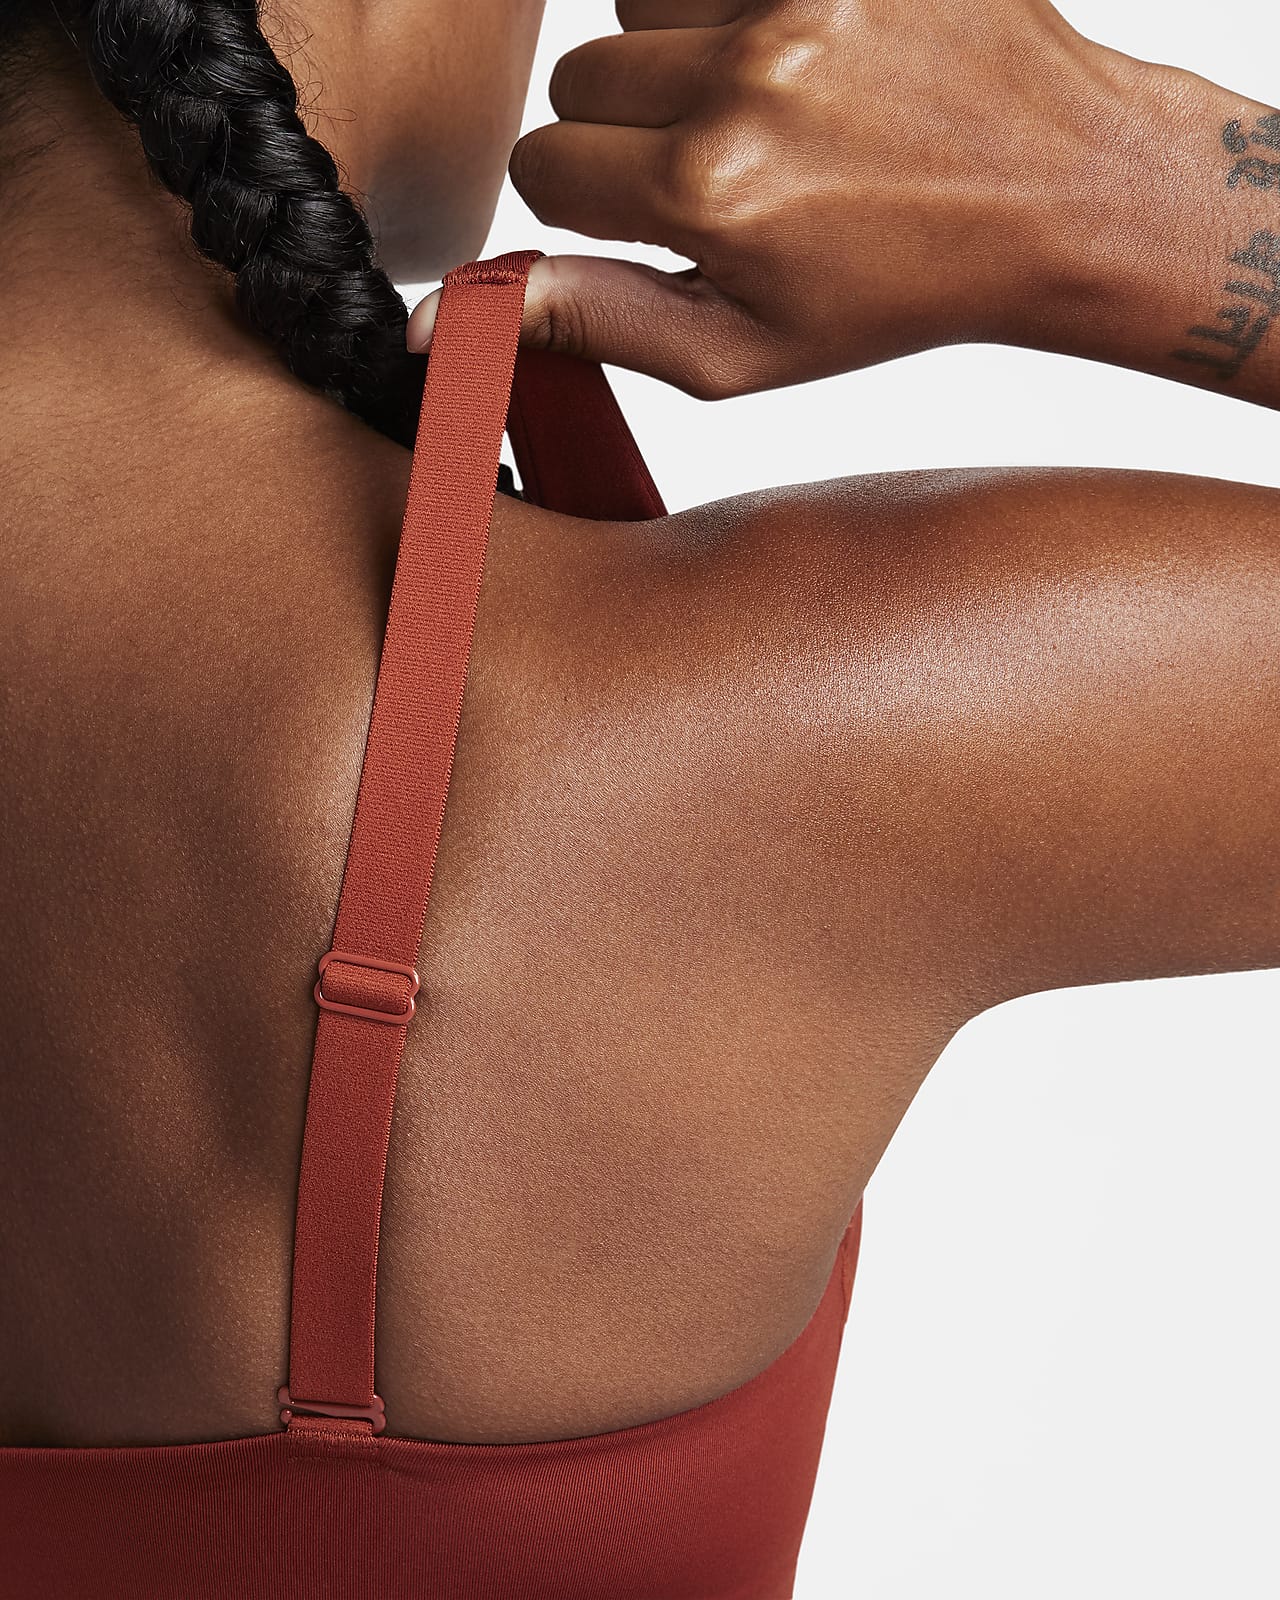 Nike Indy Plunge Cutout Bra - XL - BANDIER  Cutout bra, Padded sports bra,  Cut out design